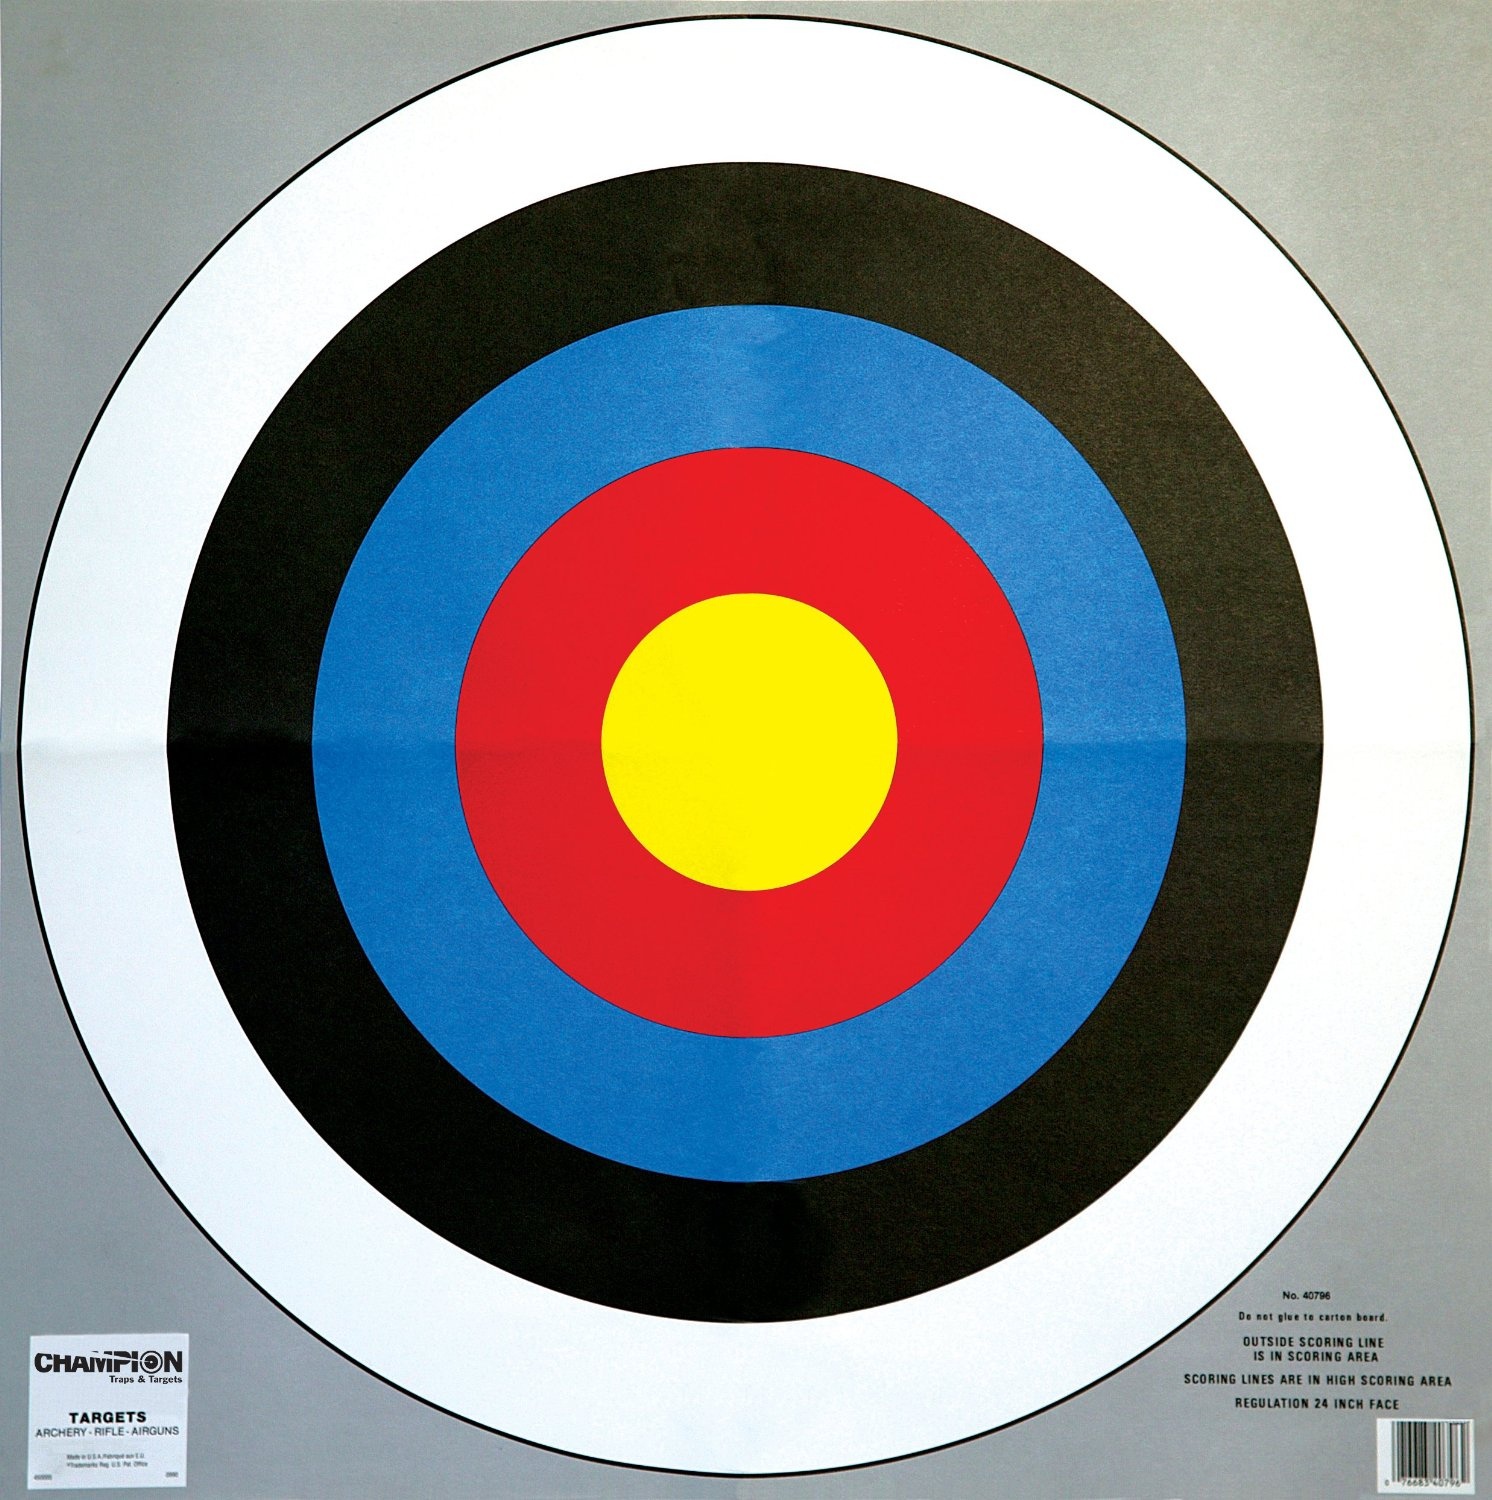 Free Archery Bullseye Cliparts, Download Free Clip Art, Free Clip - Free Printable Bullseye